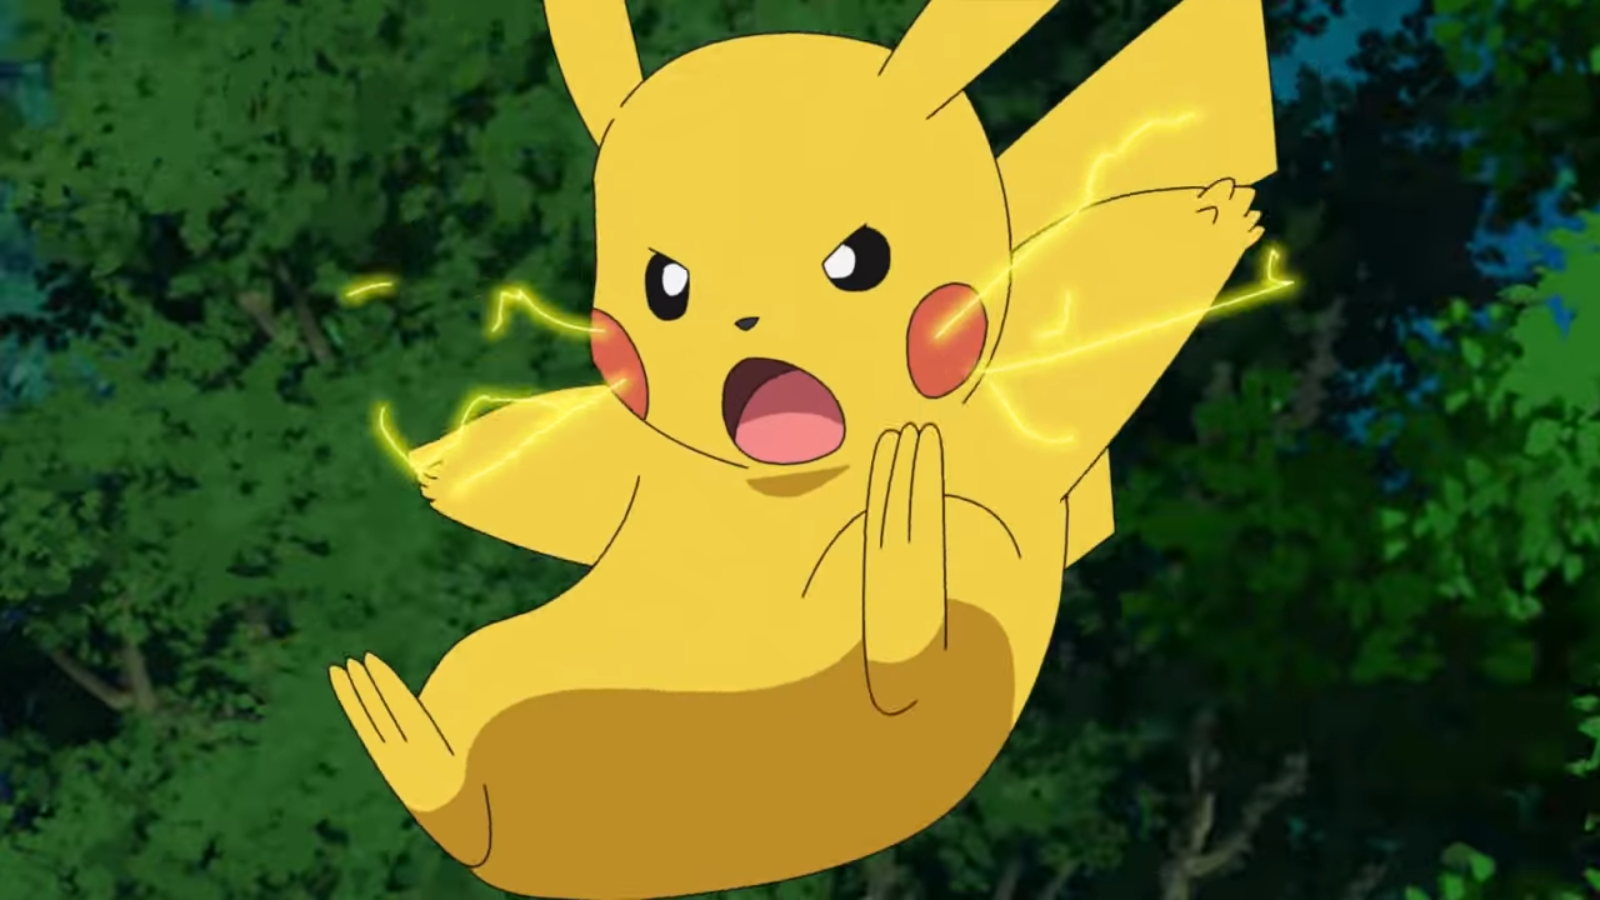 Pokémon 'Project Mew' announced as Journeys reaches its final episodes